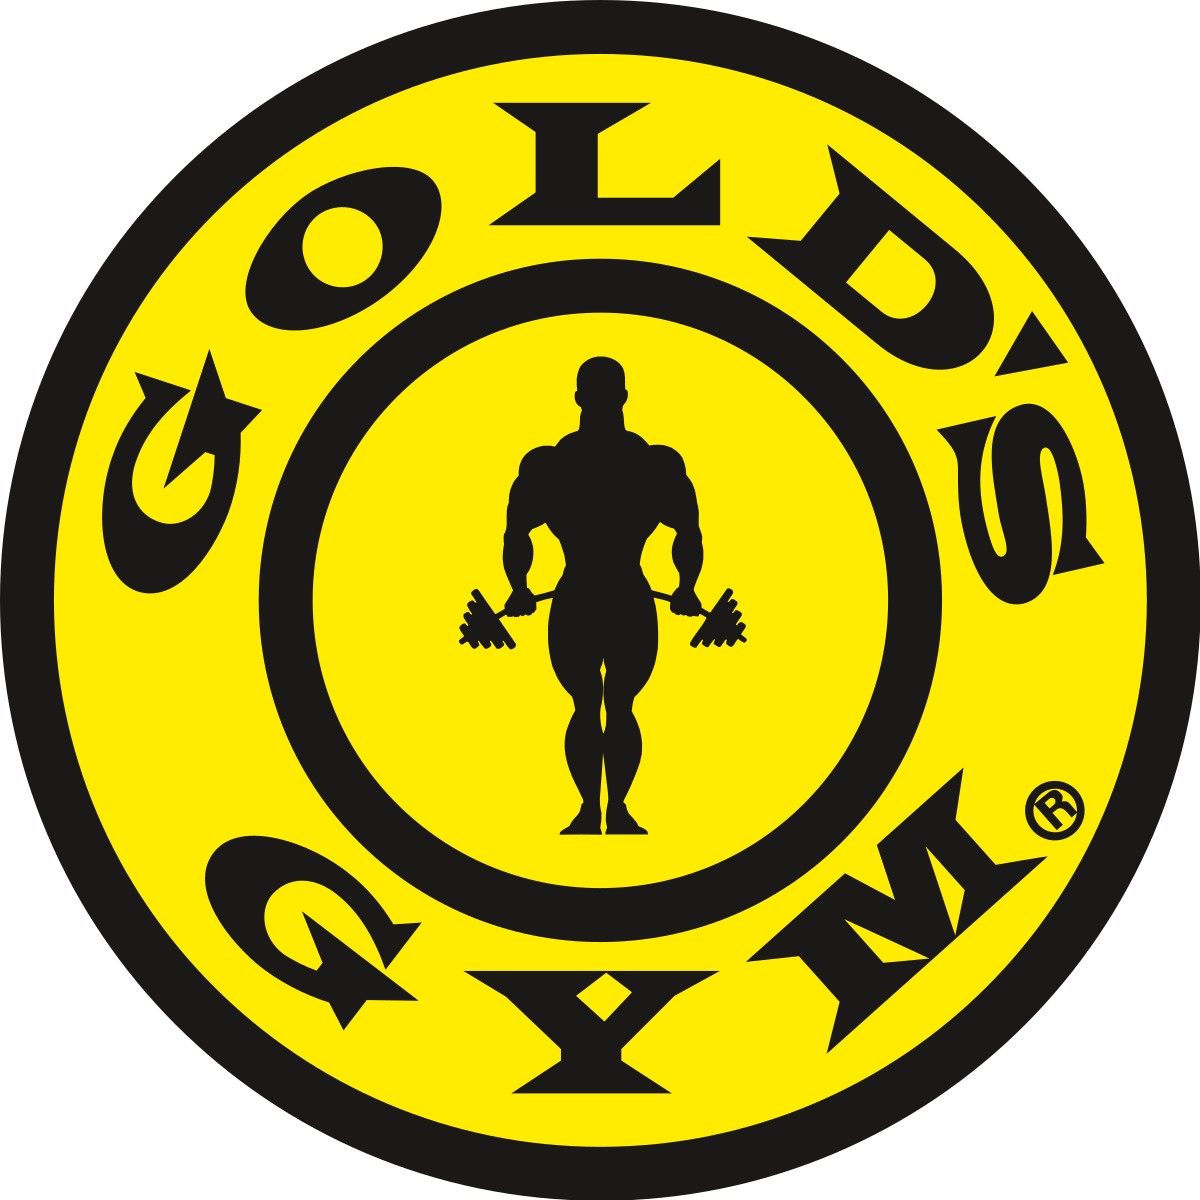 golds gym logo.png